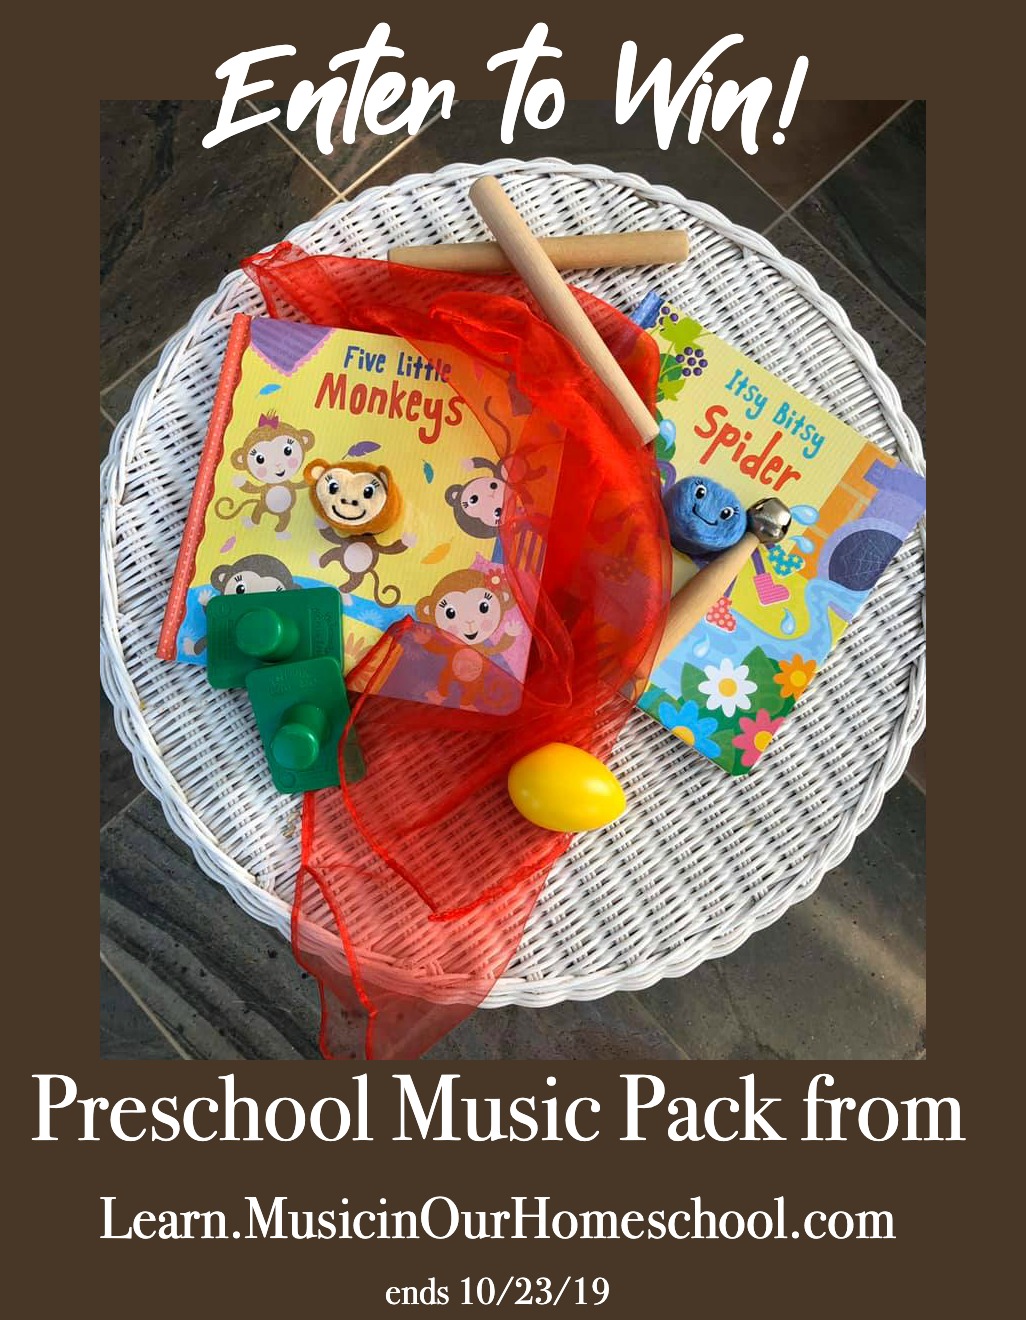 Preschool Music Pack giveaway from Music in Our Homeschool #musicinourhomeschool #homeschoolmusic #preschoolmusic